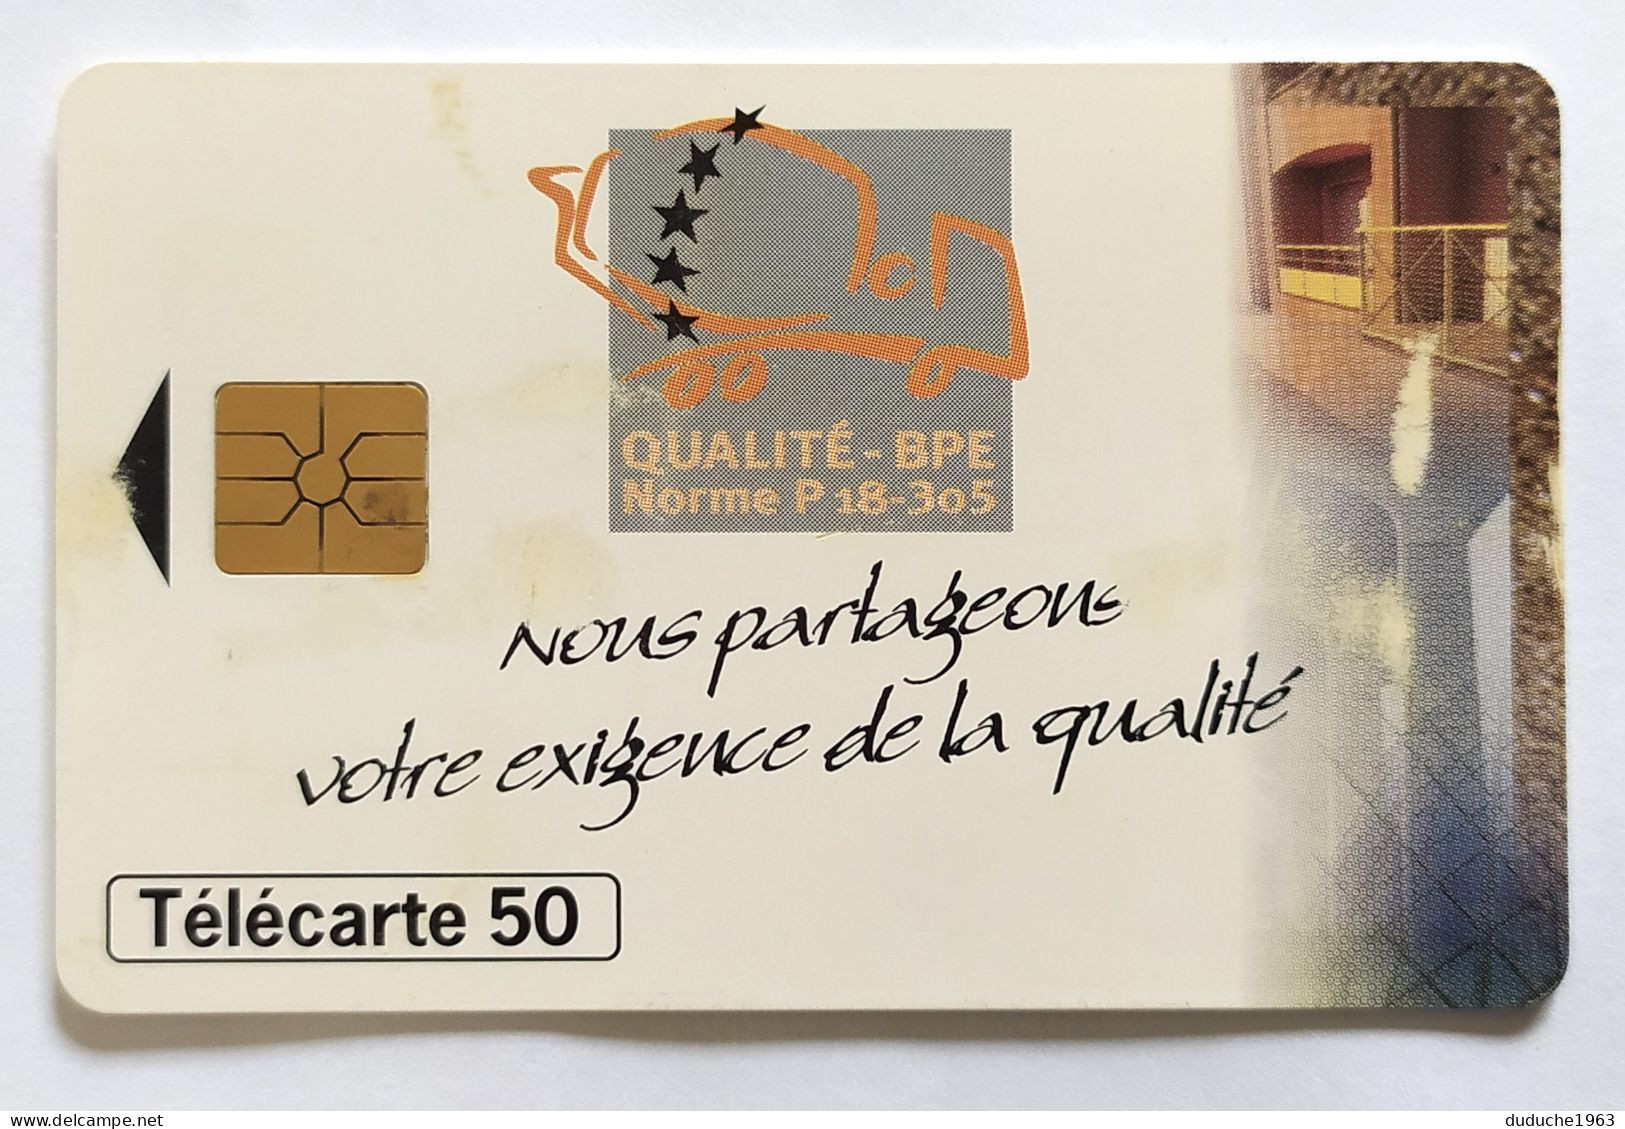 Télécarte France - BPE Syndicat National Du Béton - Phonecards: Private Use